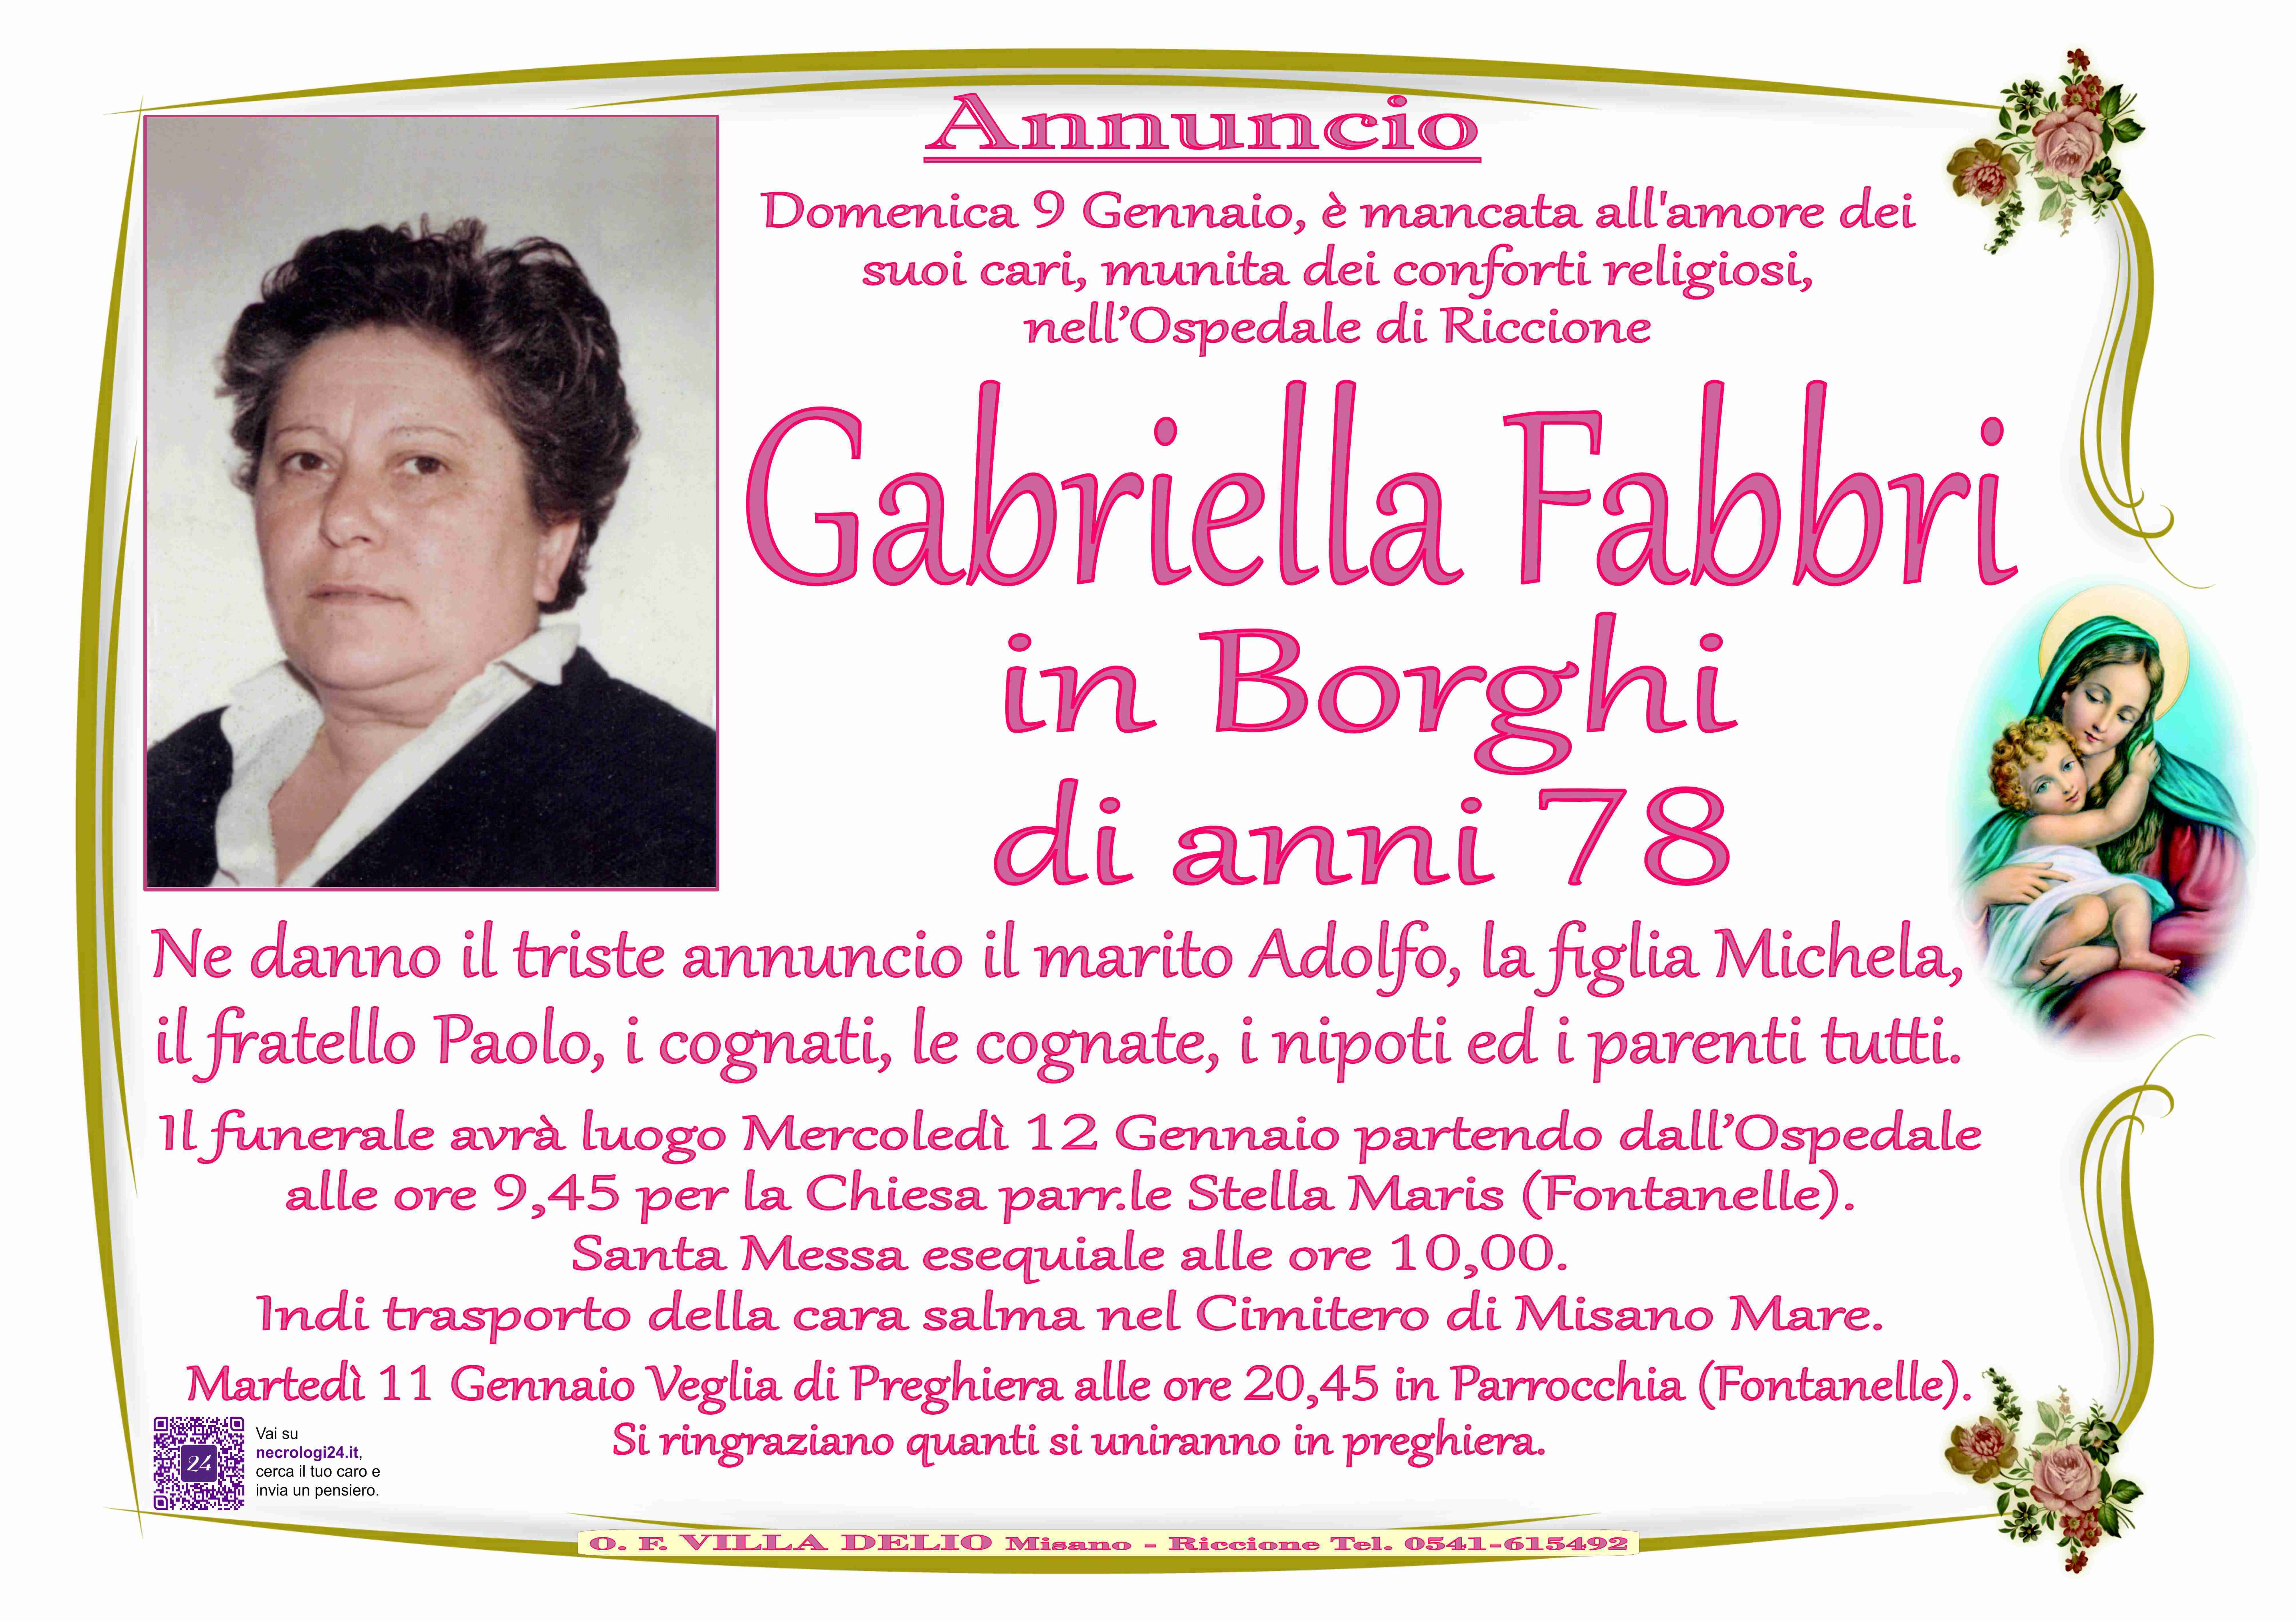 Gabriella Fabbri